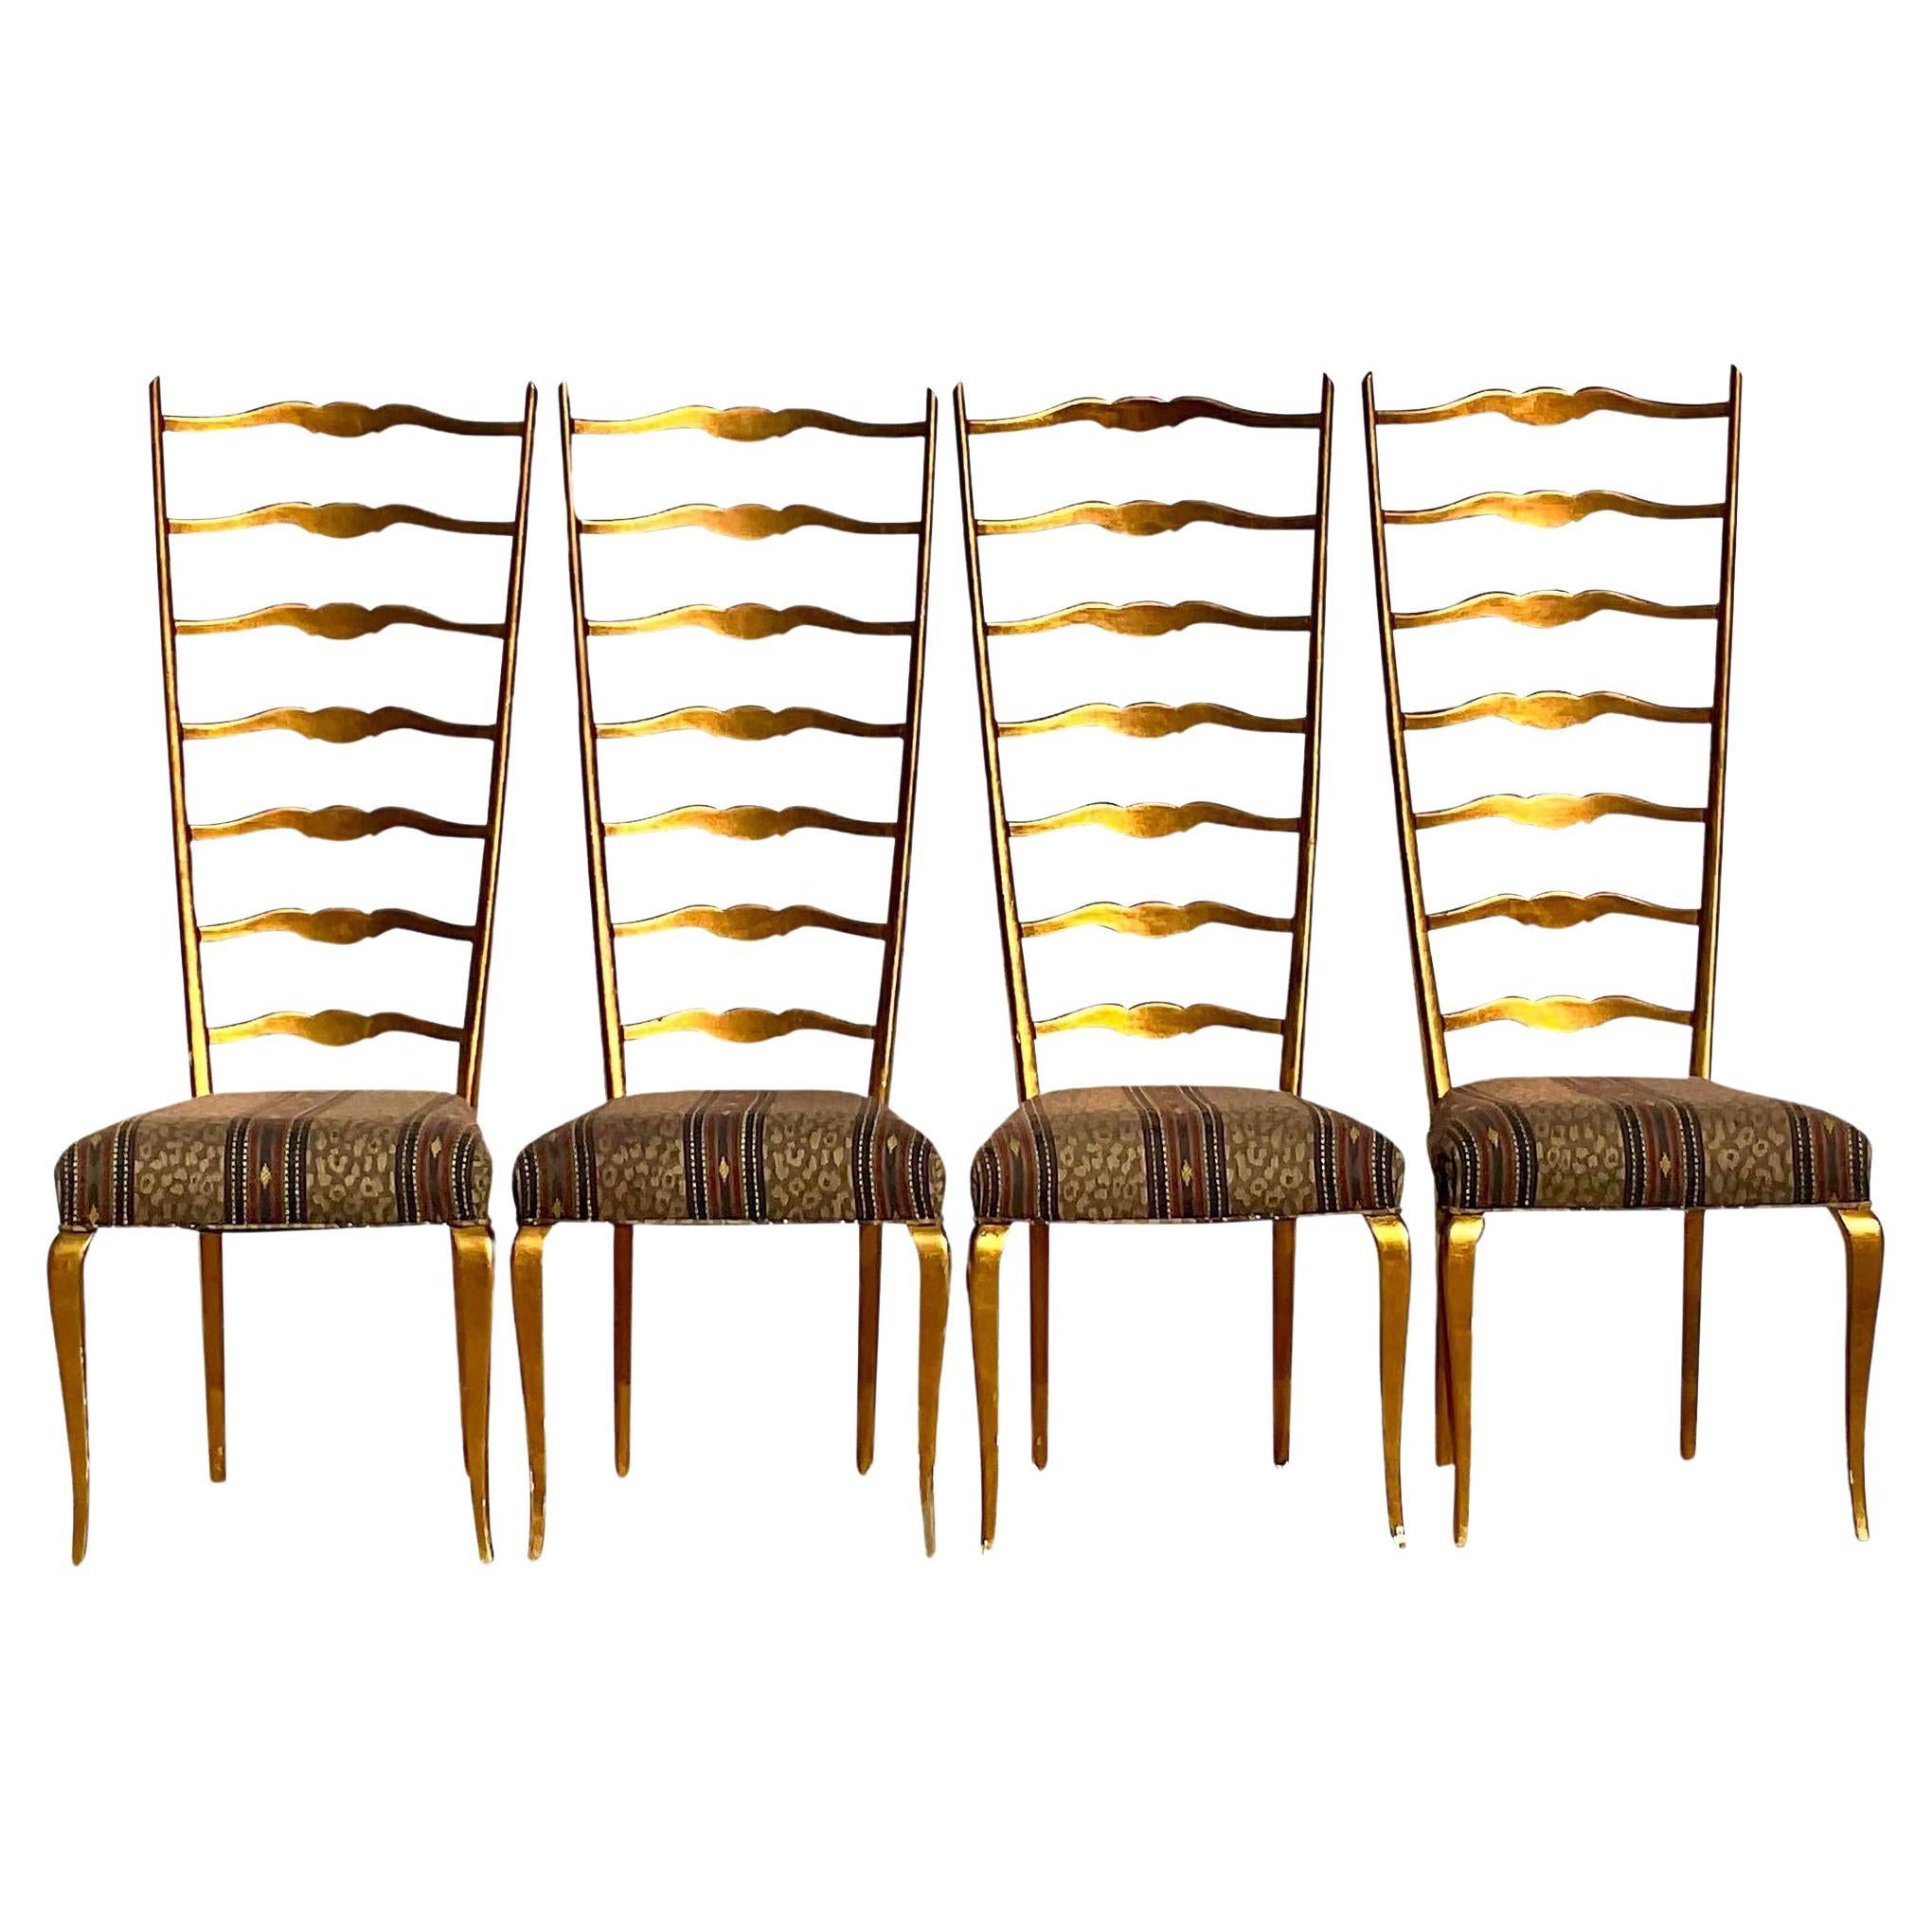 Vintage Regency Italian Gilt Ladder Back Dining Chairs - Set of 4 For Sale